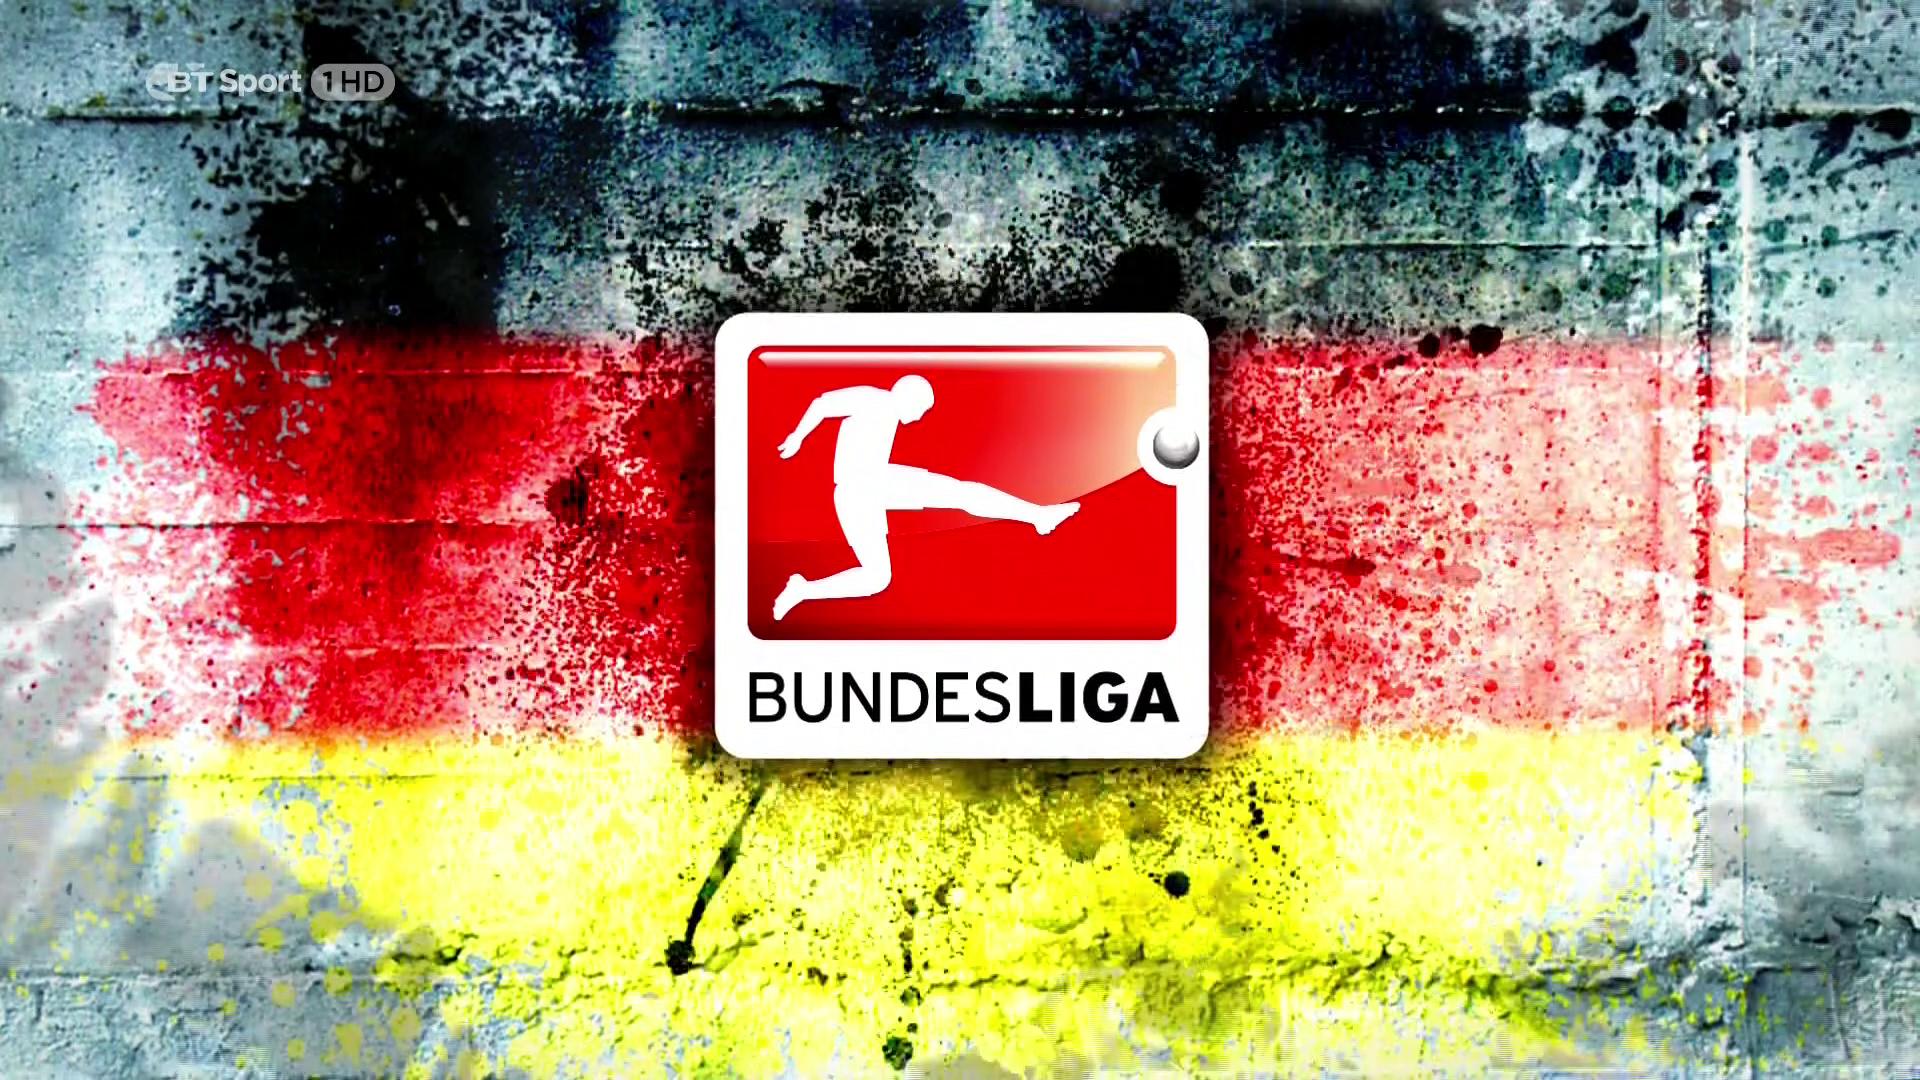 Bundesliga - Highlights Show 1